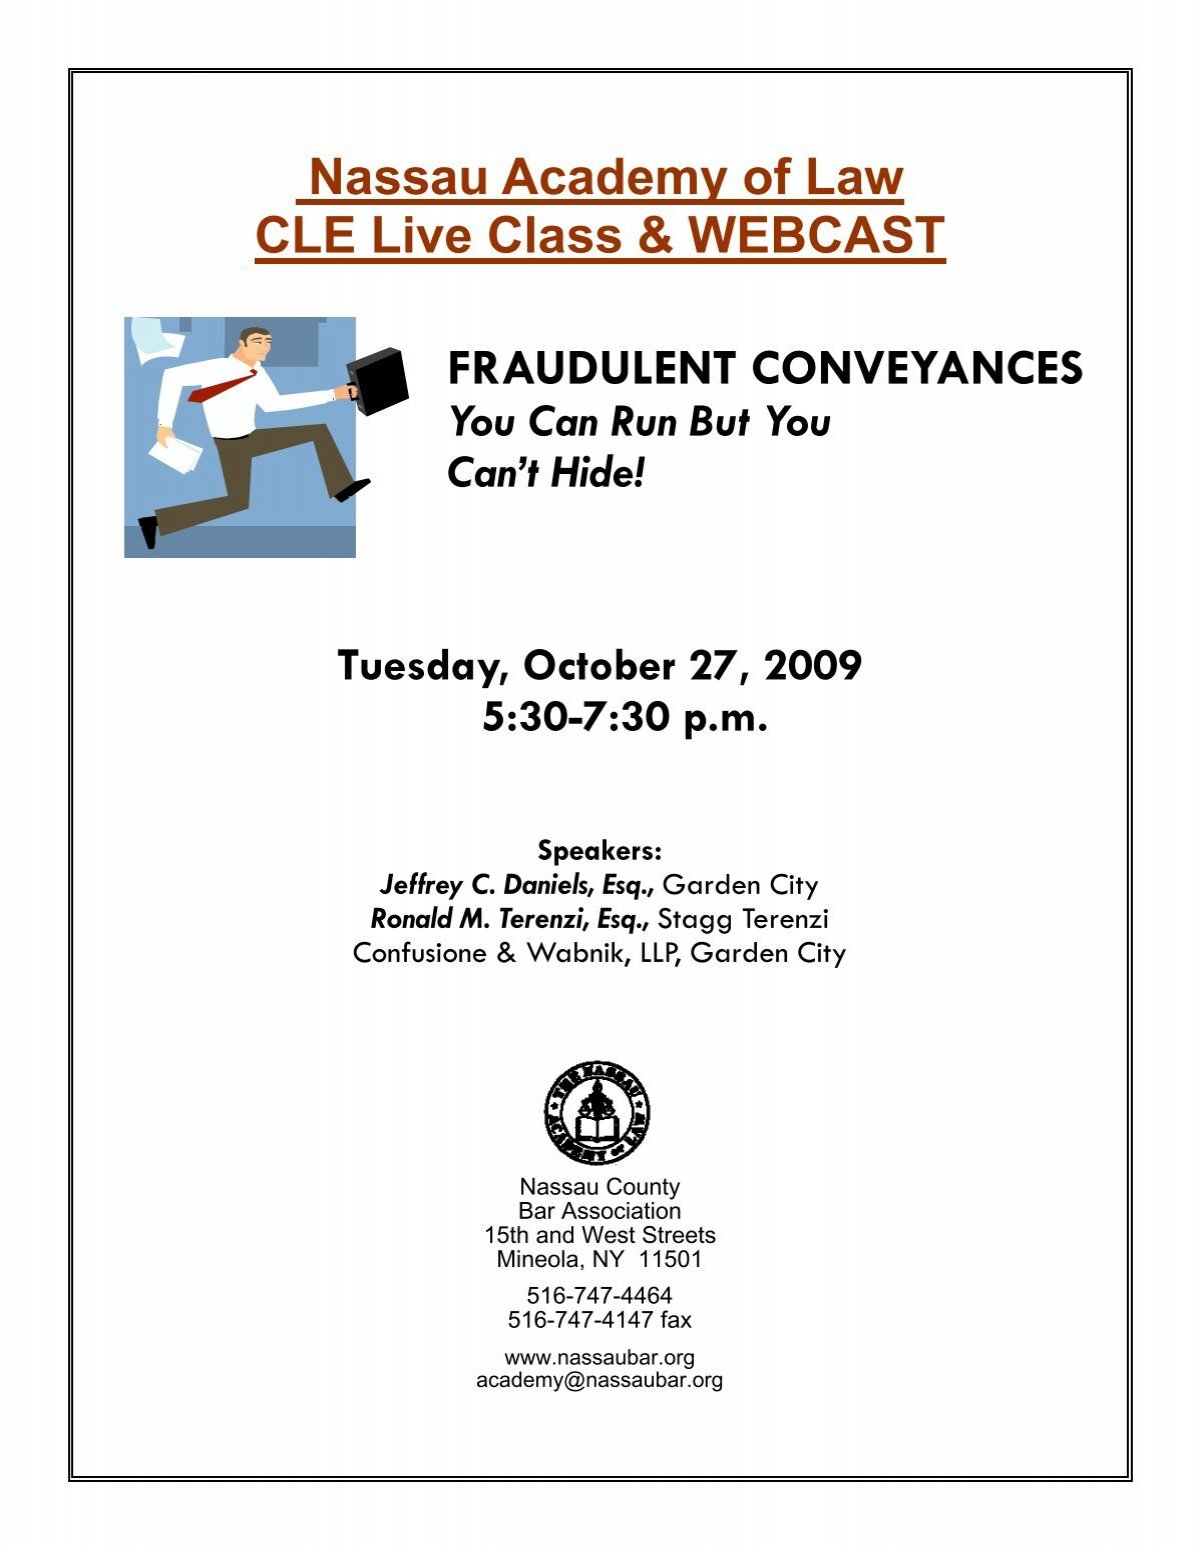 FRAUDULENT CONVEYANCES Nassau Academy of Law CLE Live